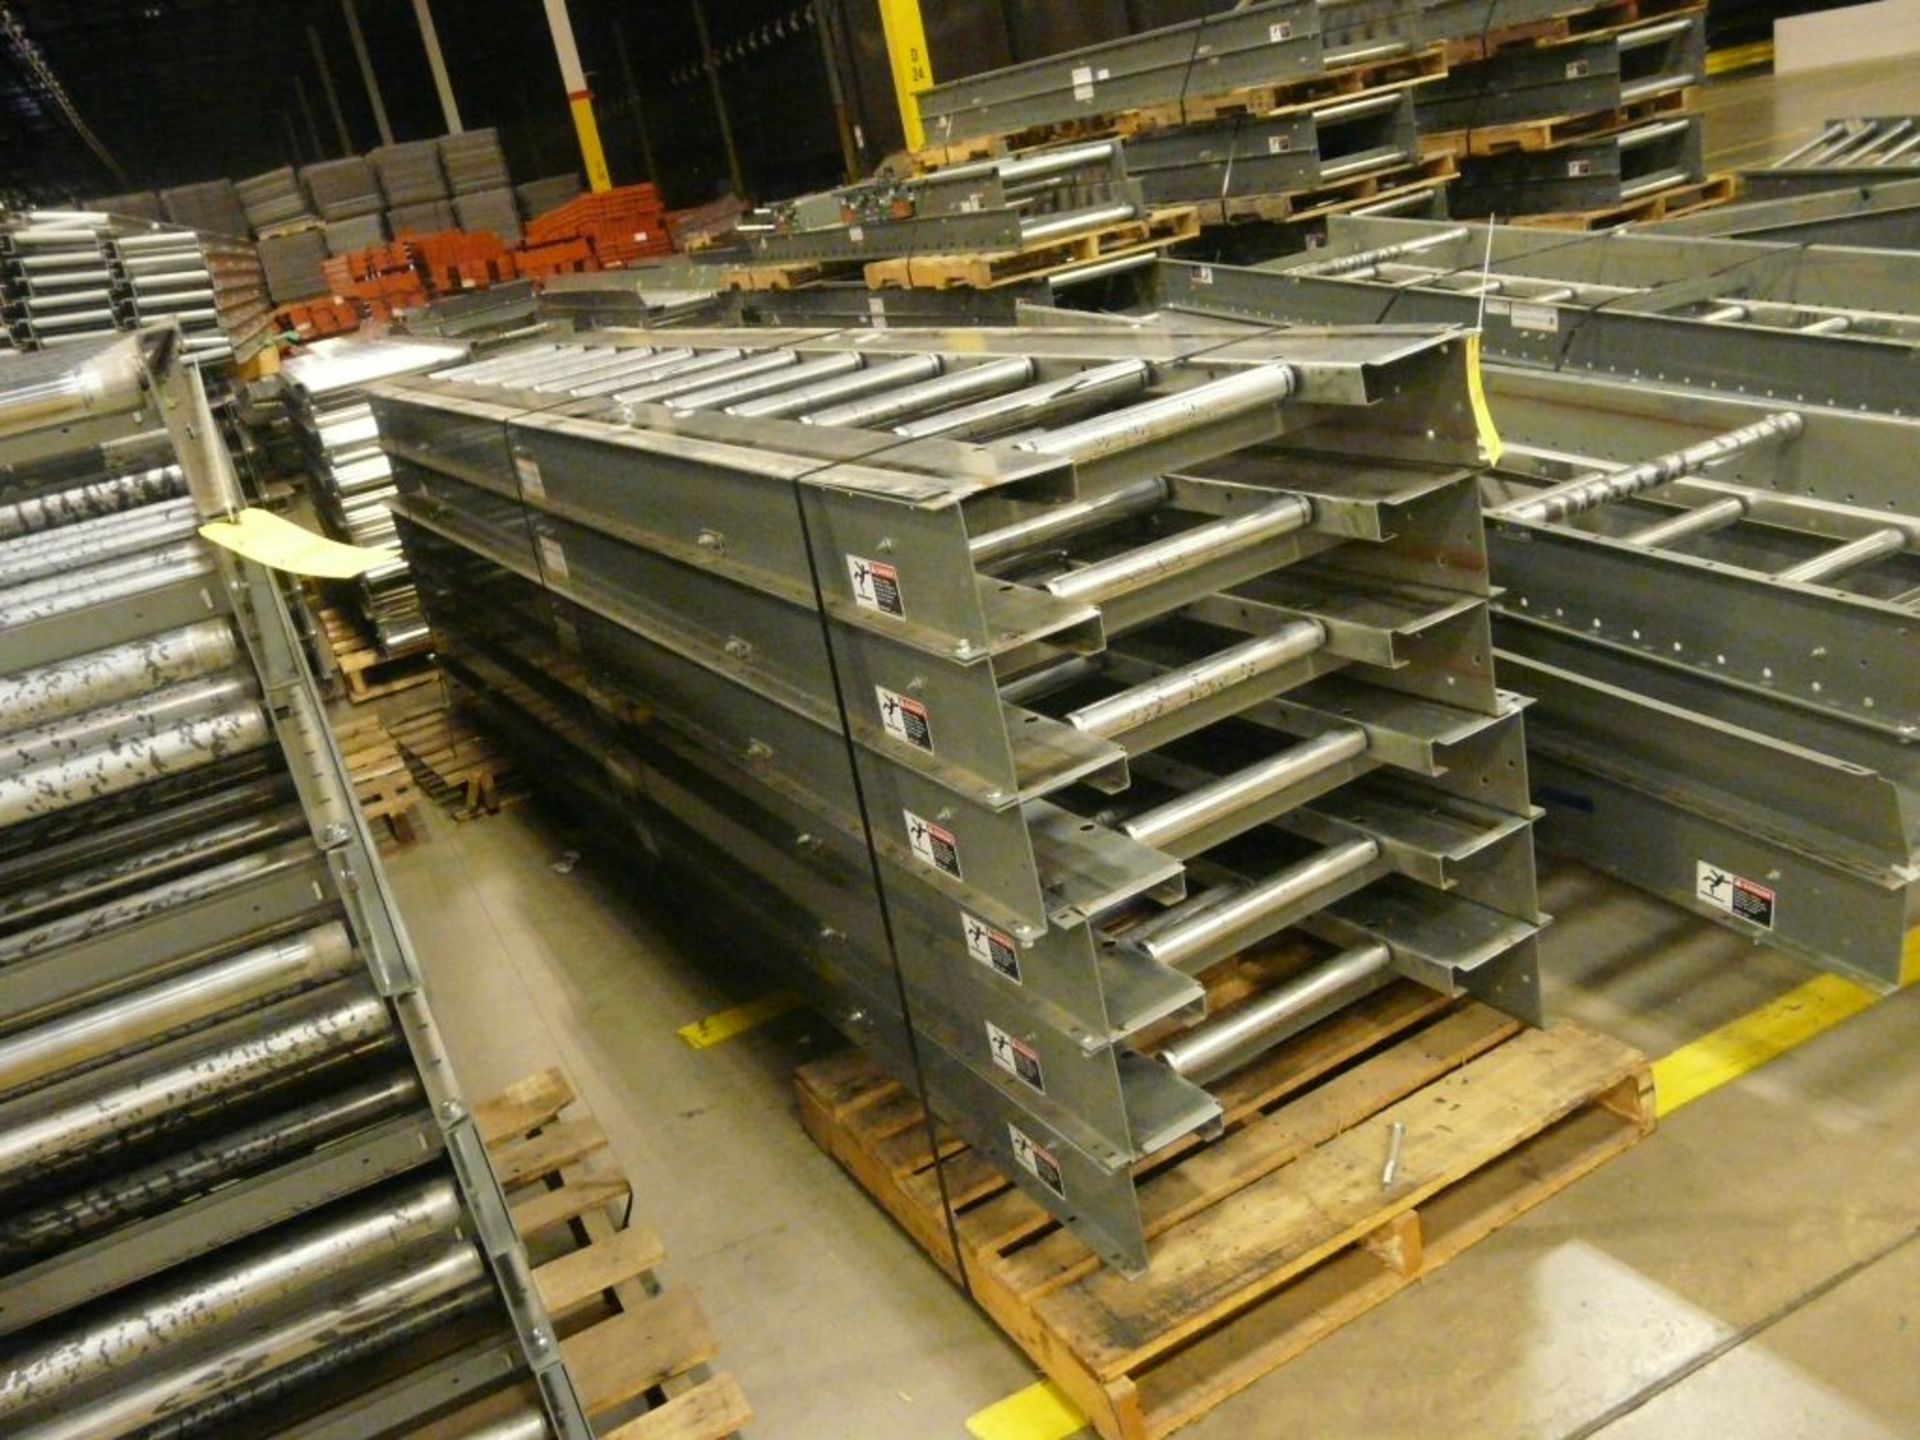 Lot of (3) 200 Belt Intermediate Conveyors - 12'L x 28"W; Tag: 223709 - $30 Lot Loading Fee - Image 2 of 4